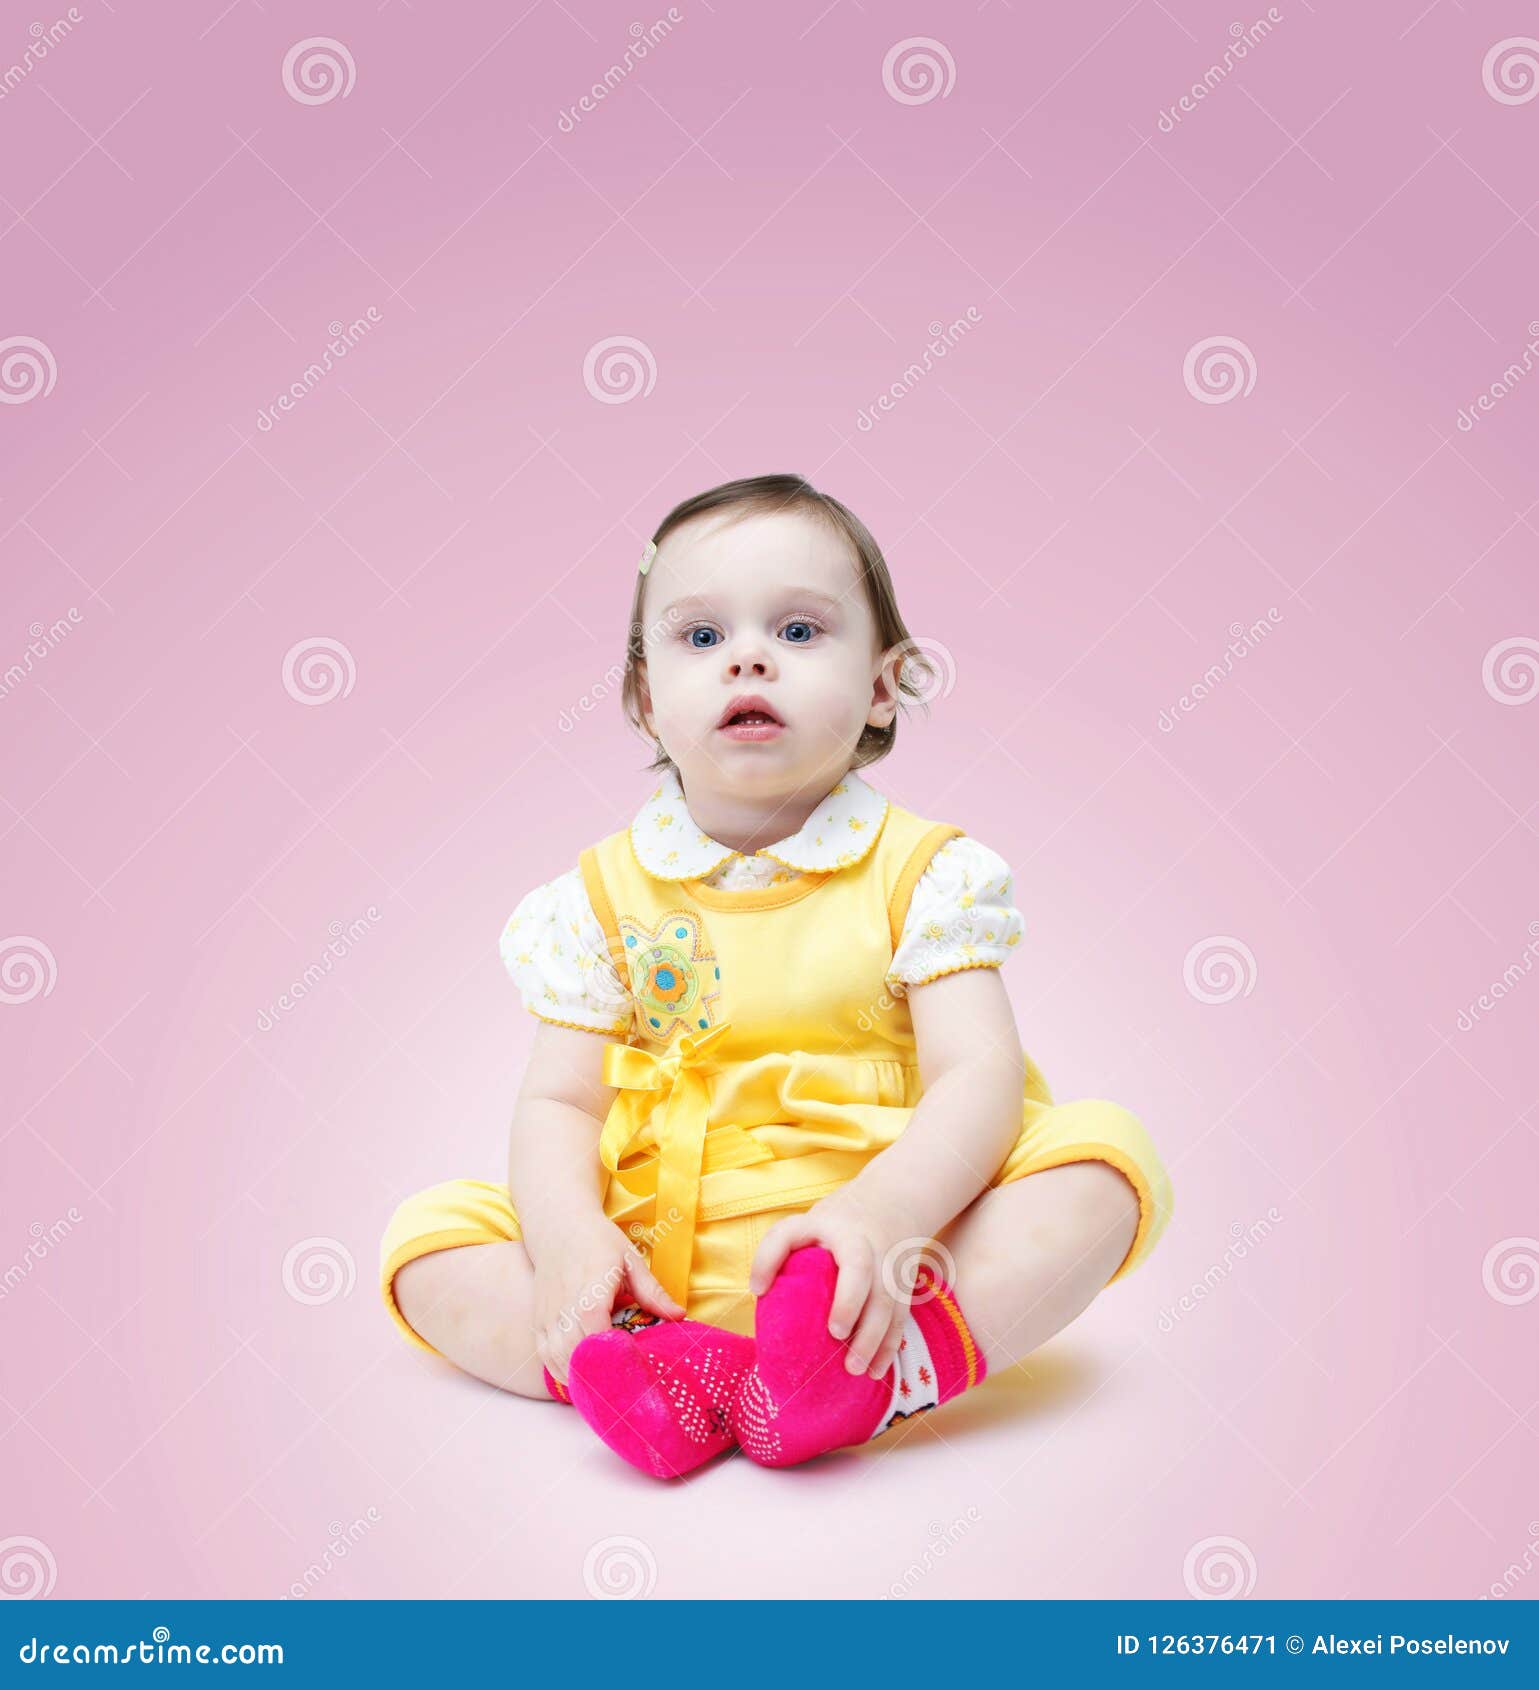 baby girl in yellow dress